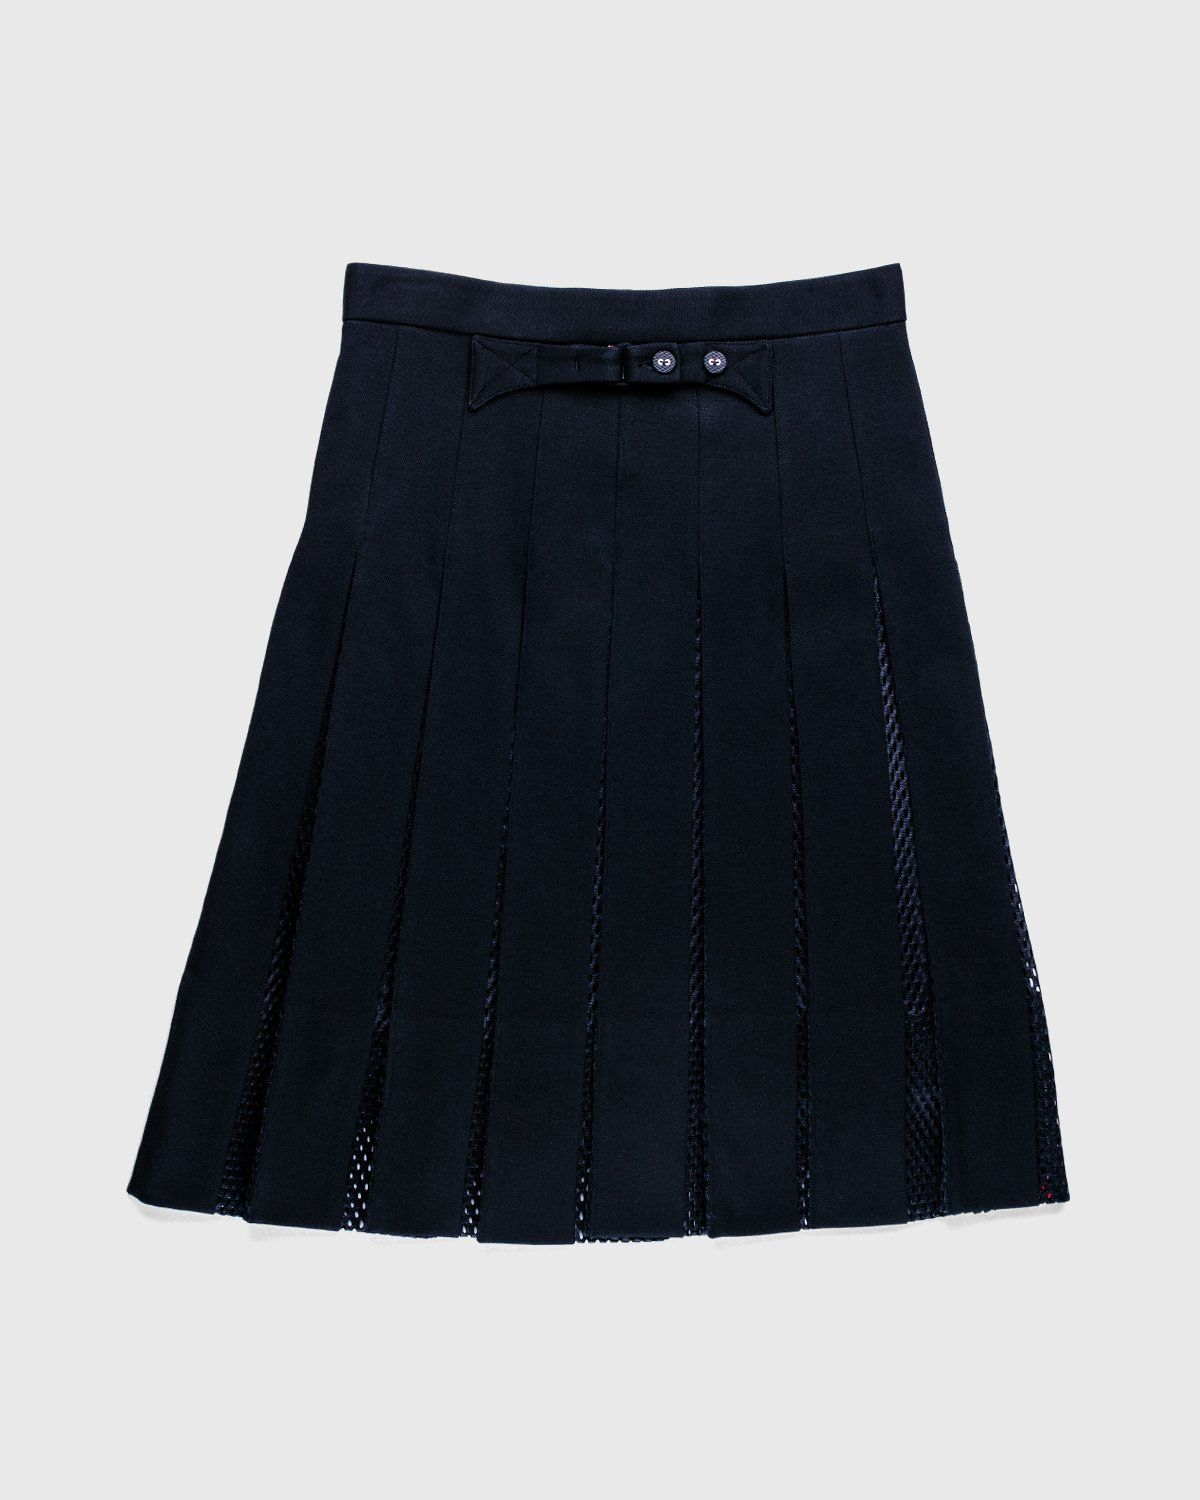 Thom Browne x Highsnobiety – Women’s Pleated Mesh Skirt Black - Suits - Black - Image 2